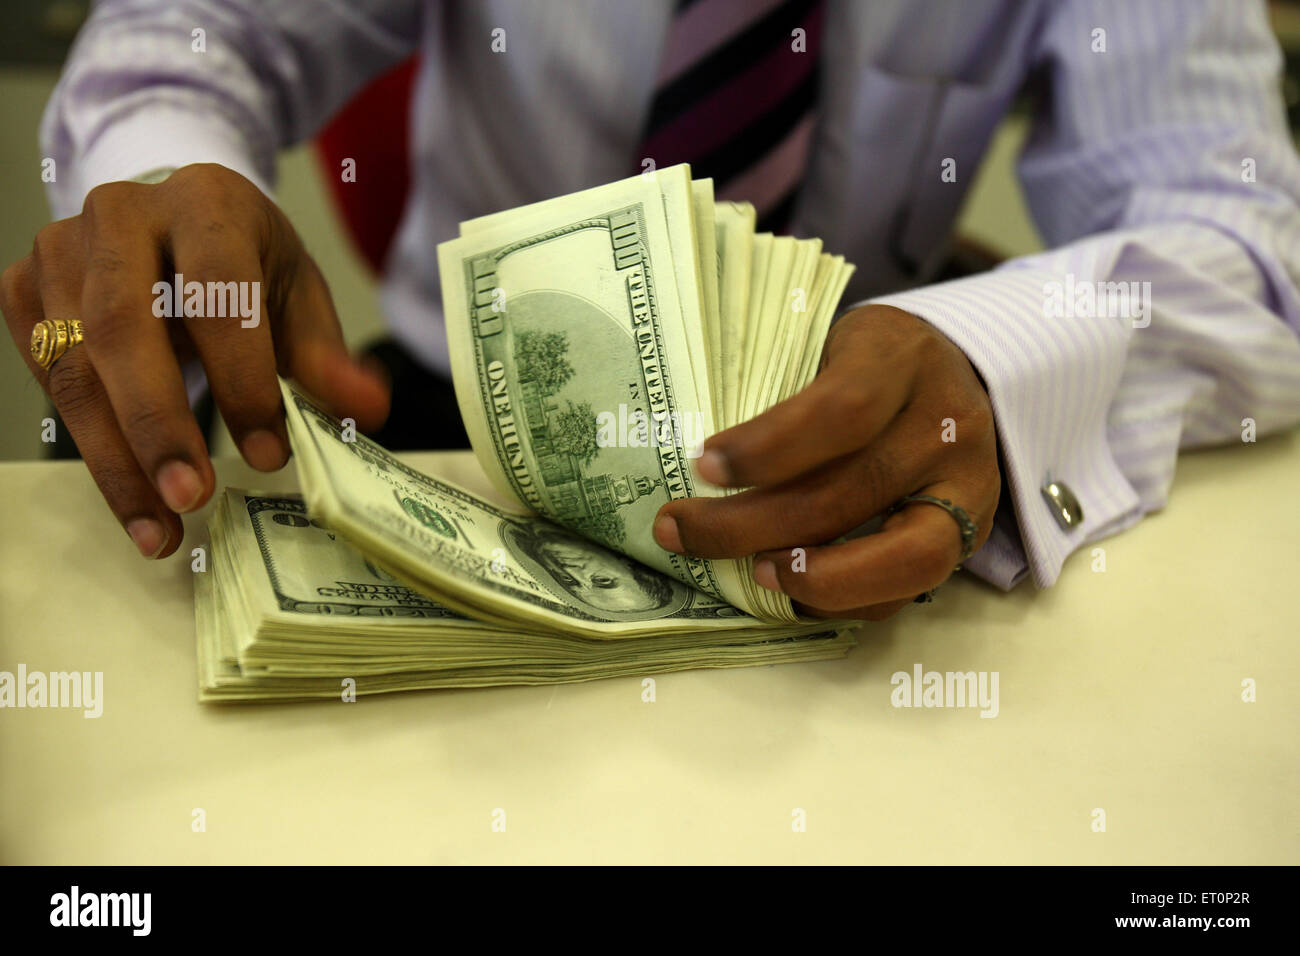 Bank handling counting US dollars Stock Photo